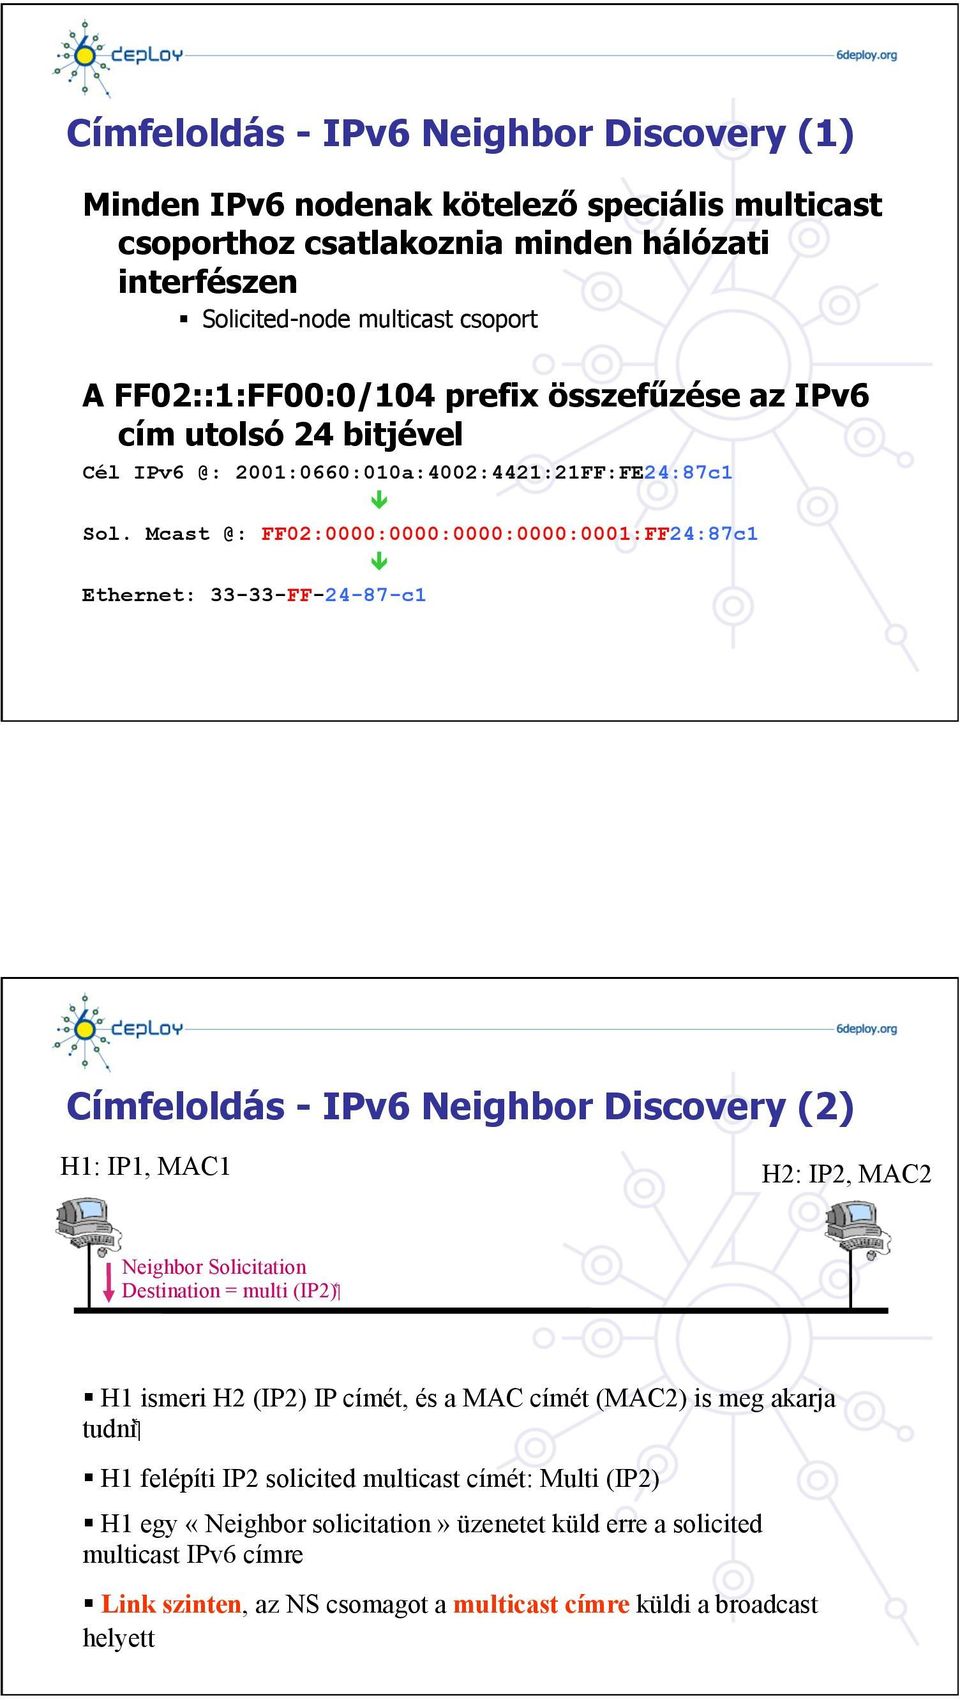 Mcast @: FF02:0000:0000:0000:0000:0001:FF24:87c1 Ethernet: 33-33-FF-24-87-c1 Címfeloldás - IPv6 Neighbor Discovery (2) H1: IP1, MAC1 H2: IP2, MAC2 Neighbor Solicitation ( IP2 ) Destination = multi H1